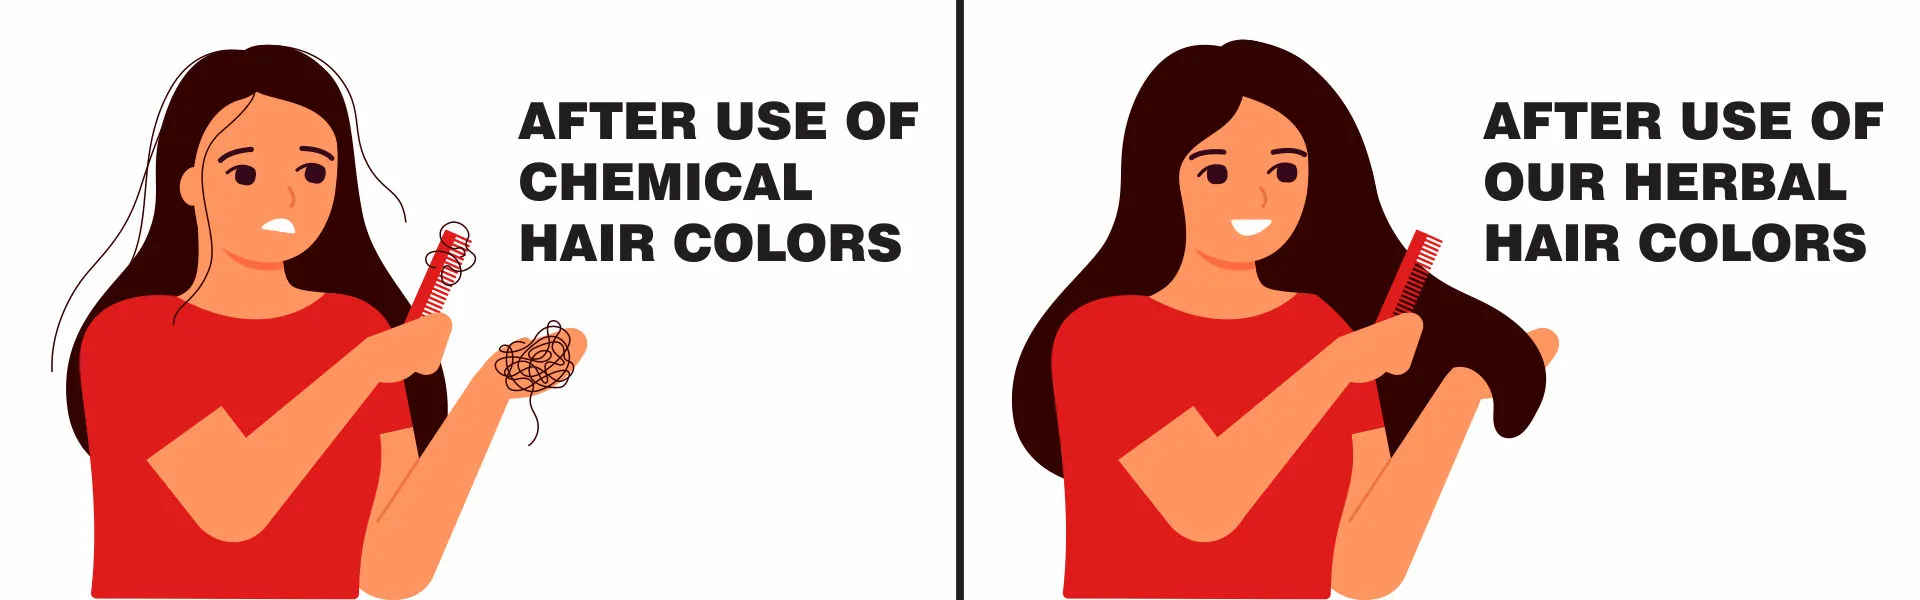 Chemical hair vs herbal hair colors - www.dkihenna.com